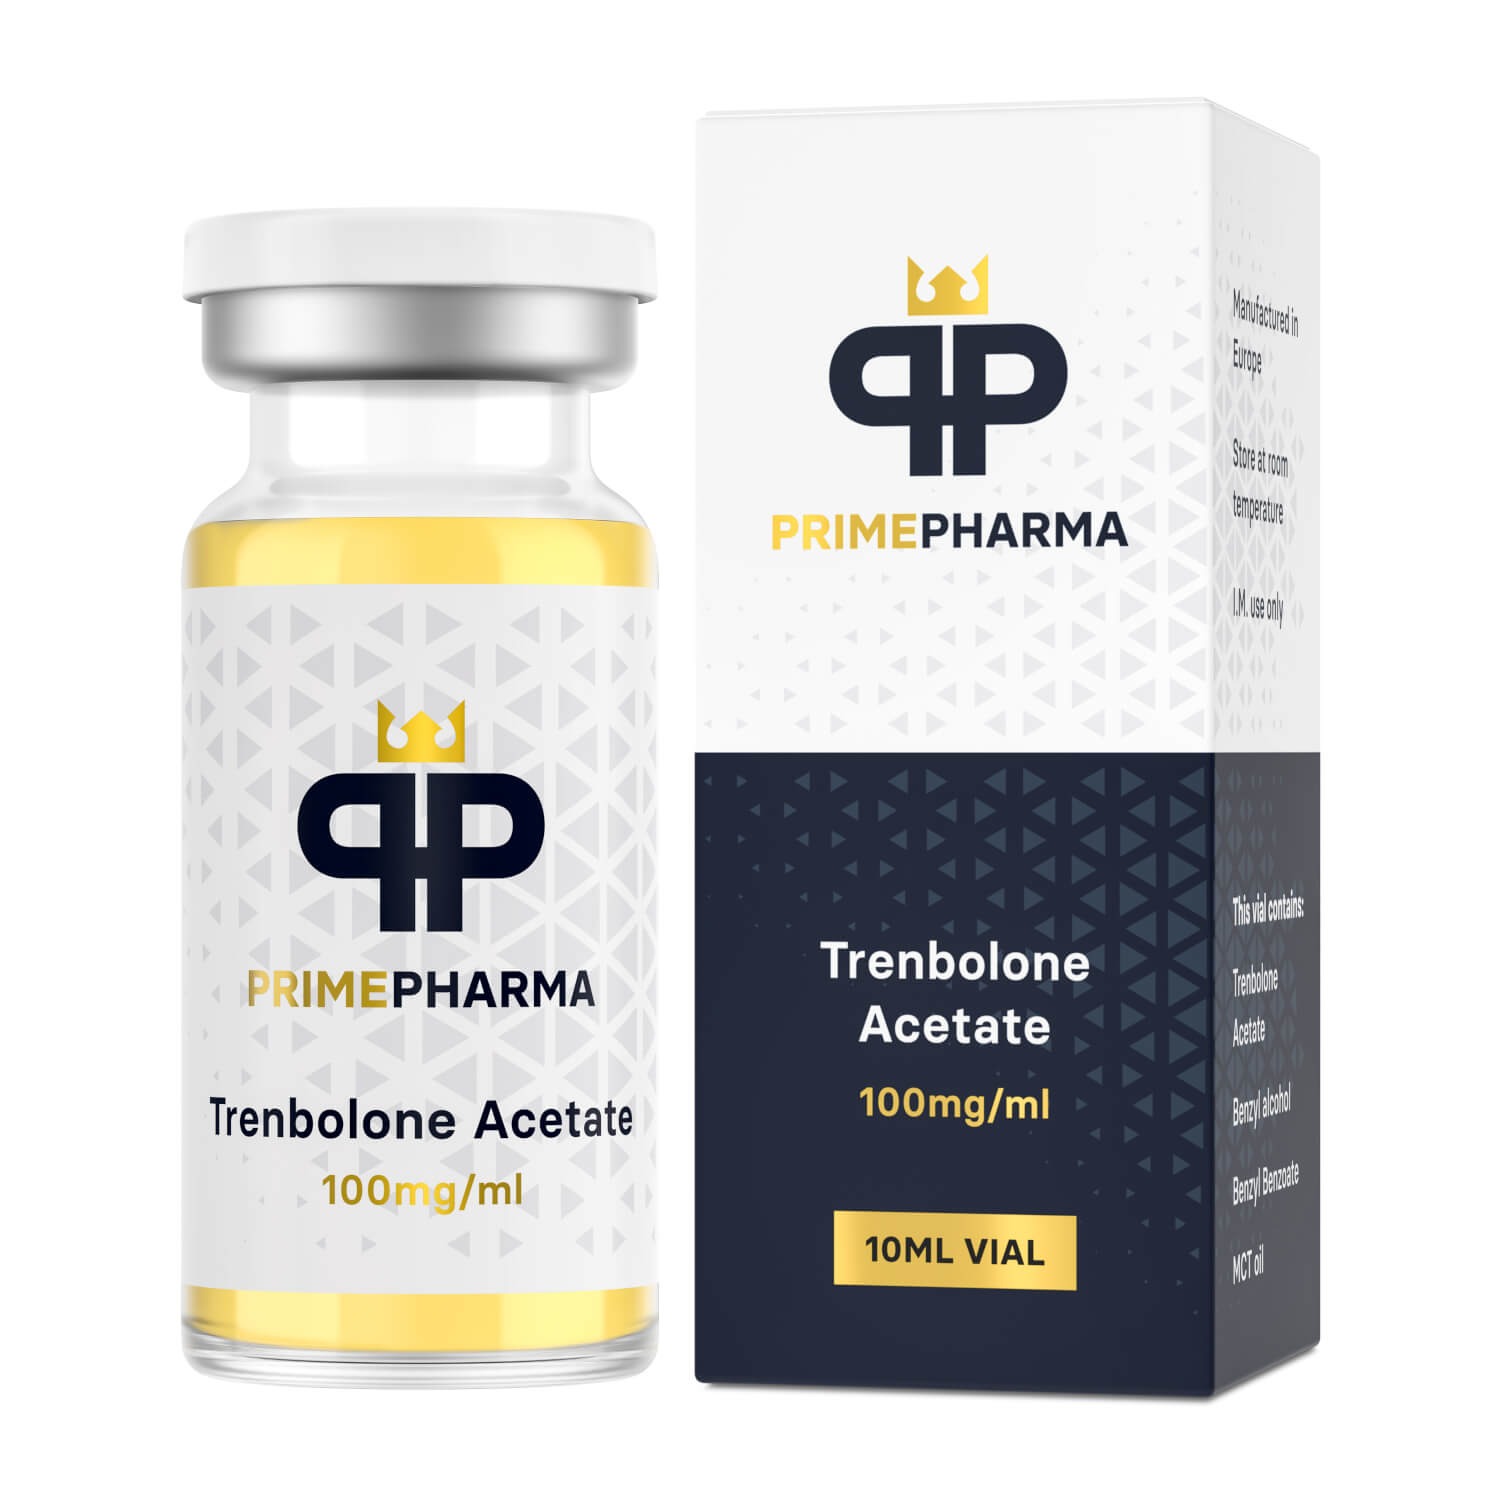 Prime-Pharma-trenbolon-acetaat